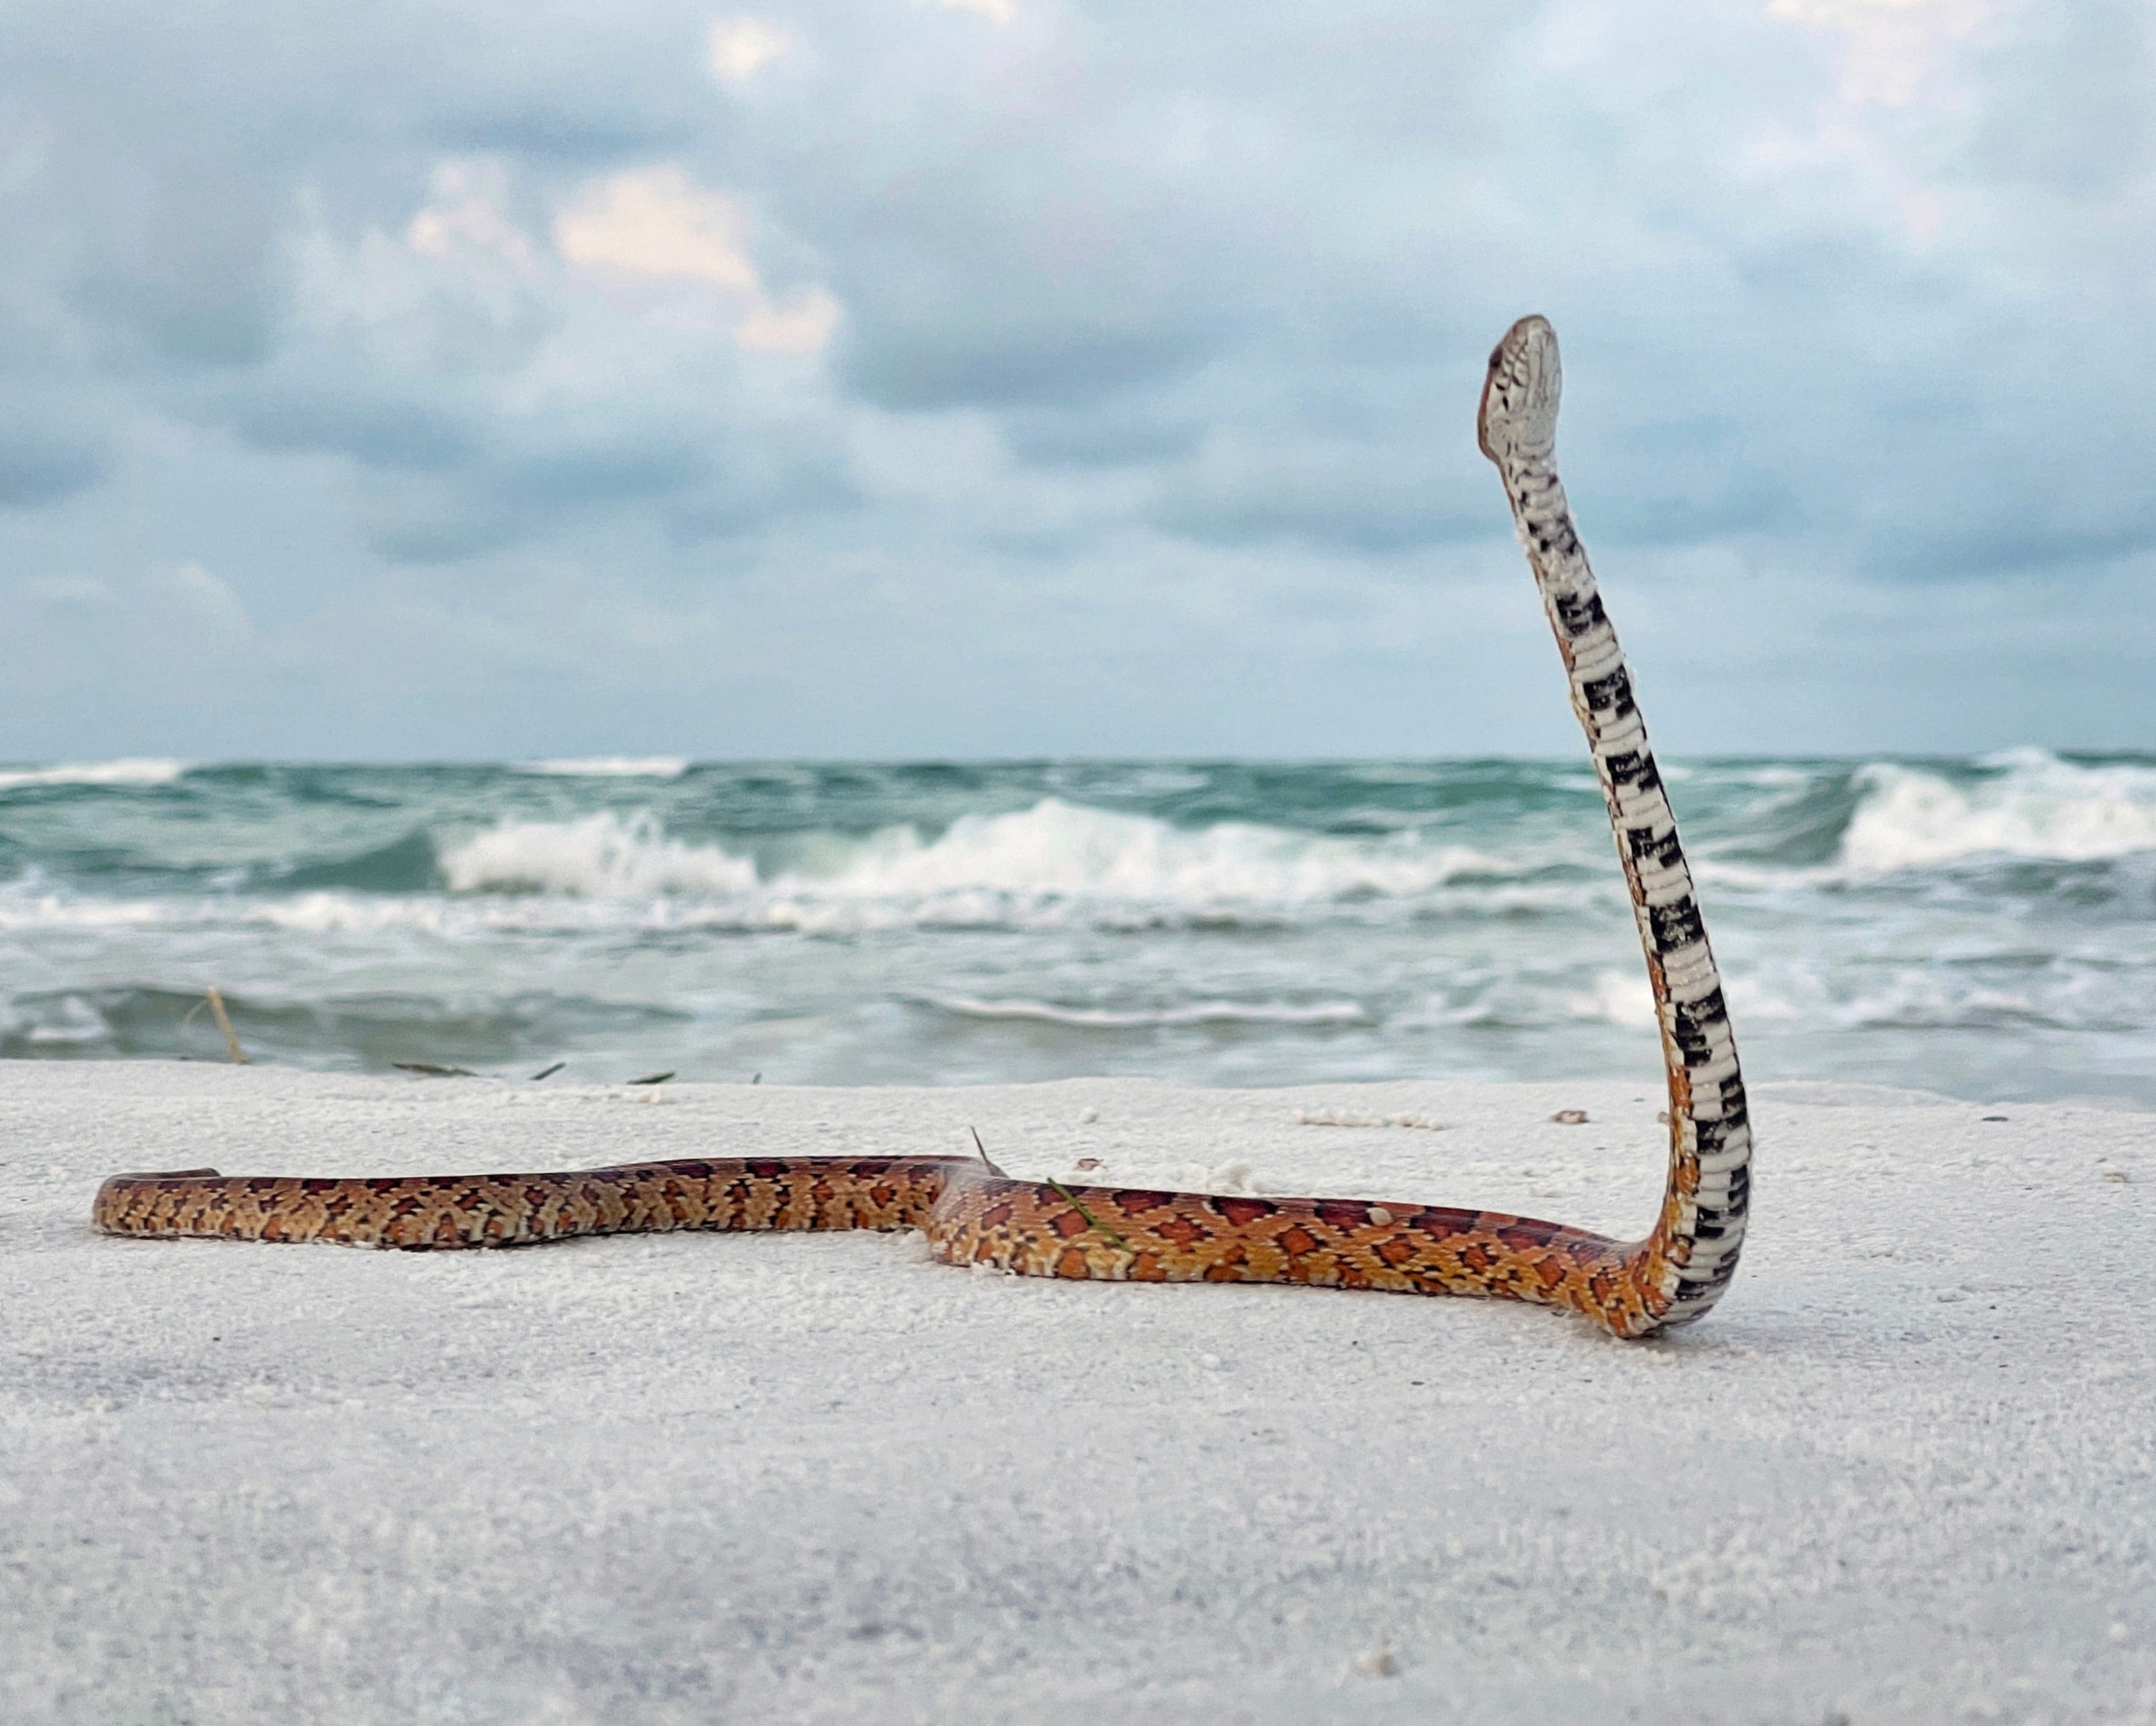 Conservation Foundation Summer Photo Contest invites community to celebrate Florida nature